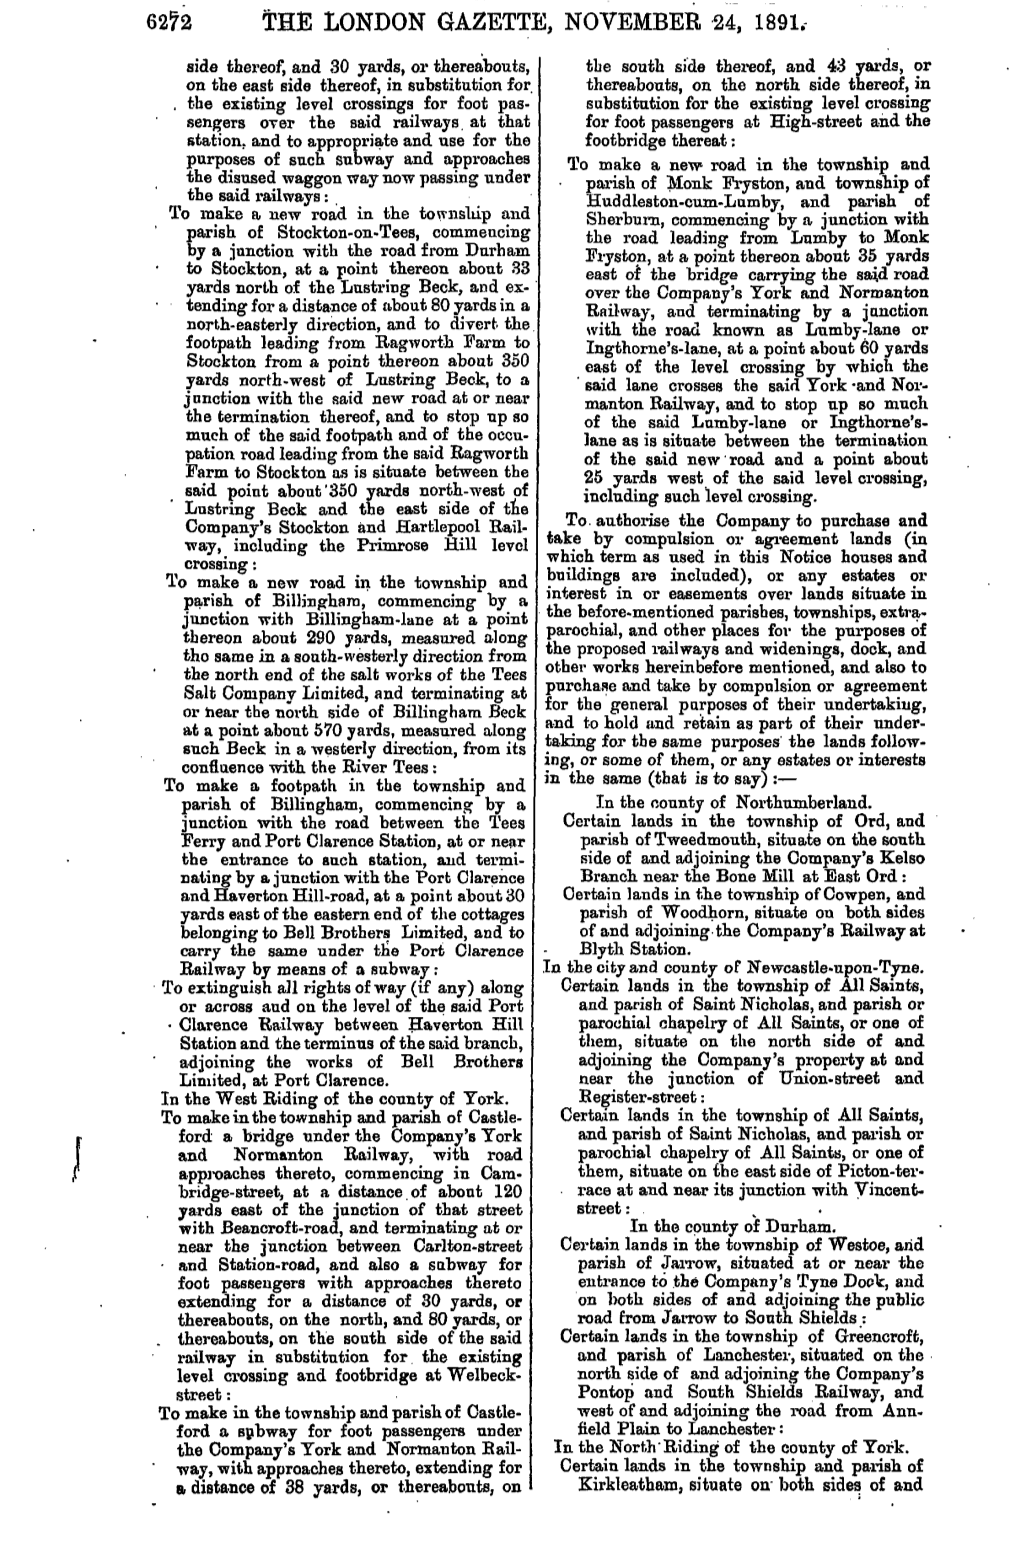 The London Gazette, November 24, 1891